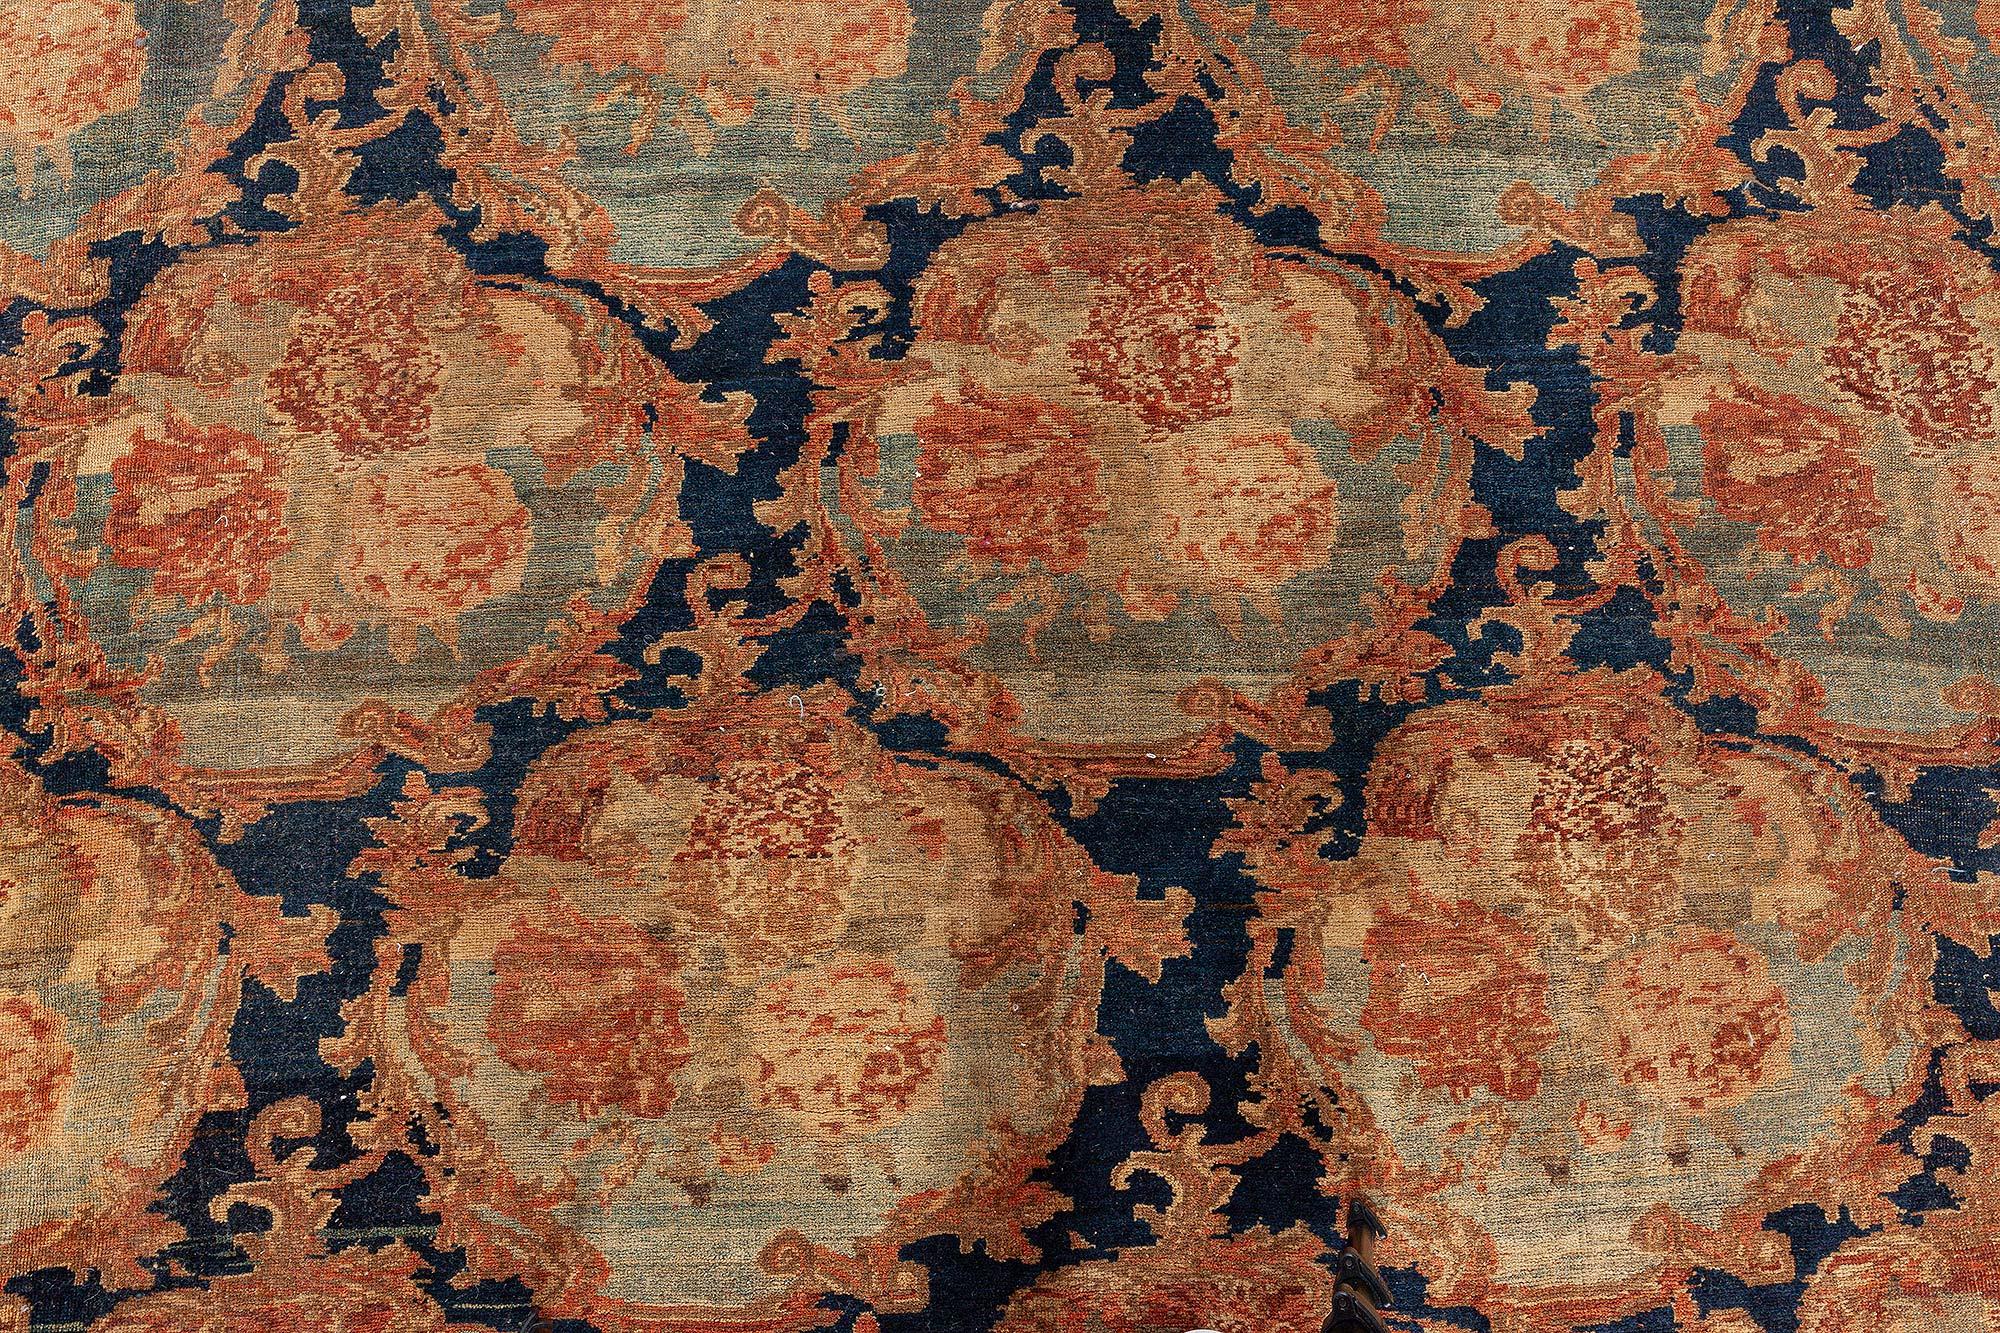 Large antique Bidjar botanic handmade wool rug (size adjusted)
Size: 14'5